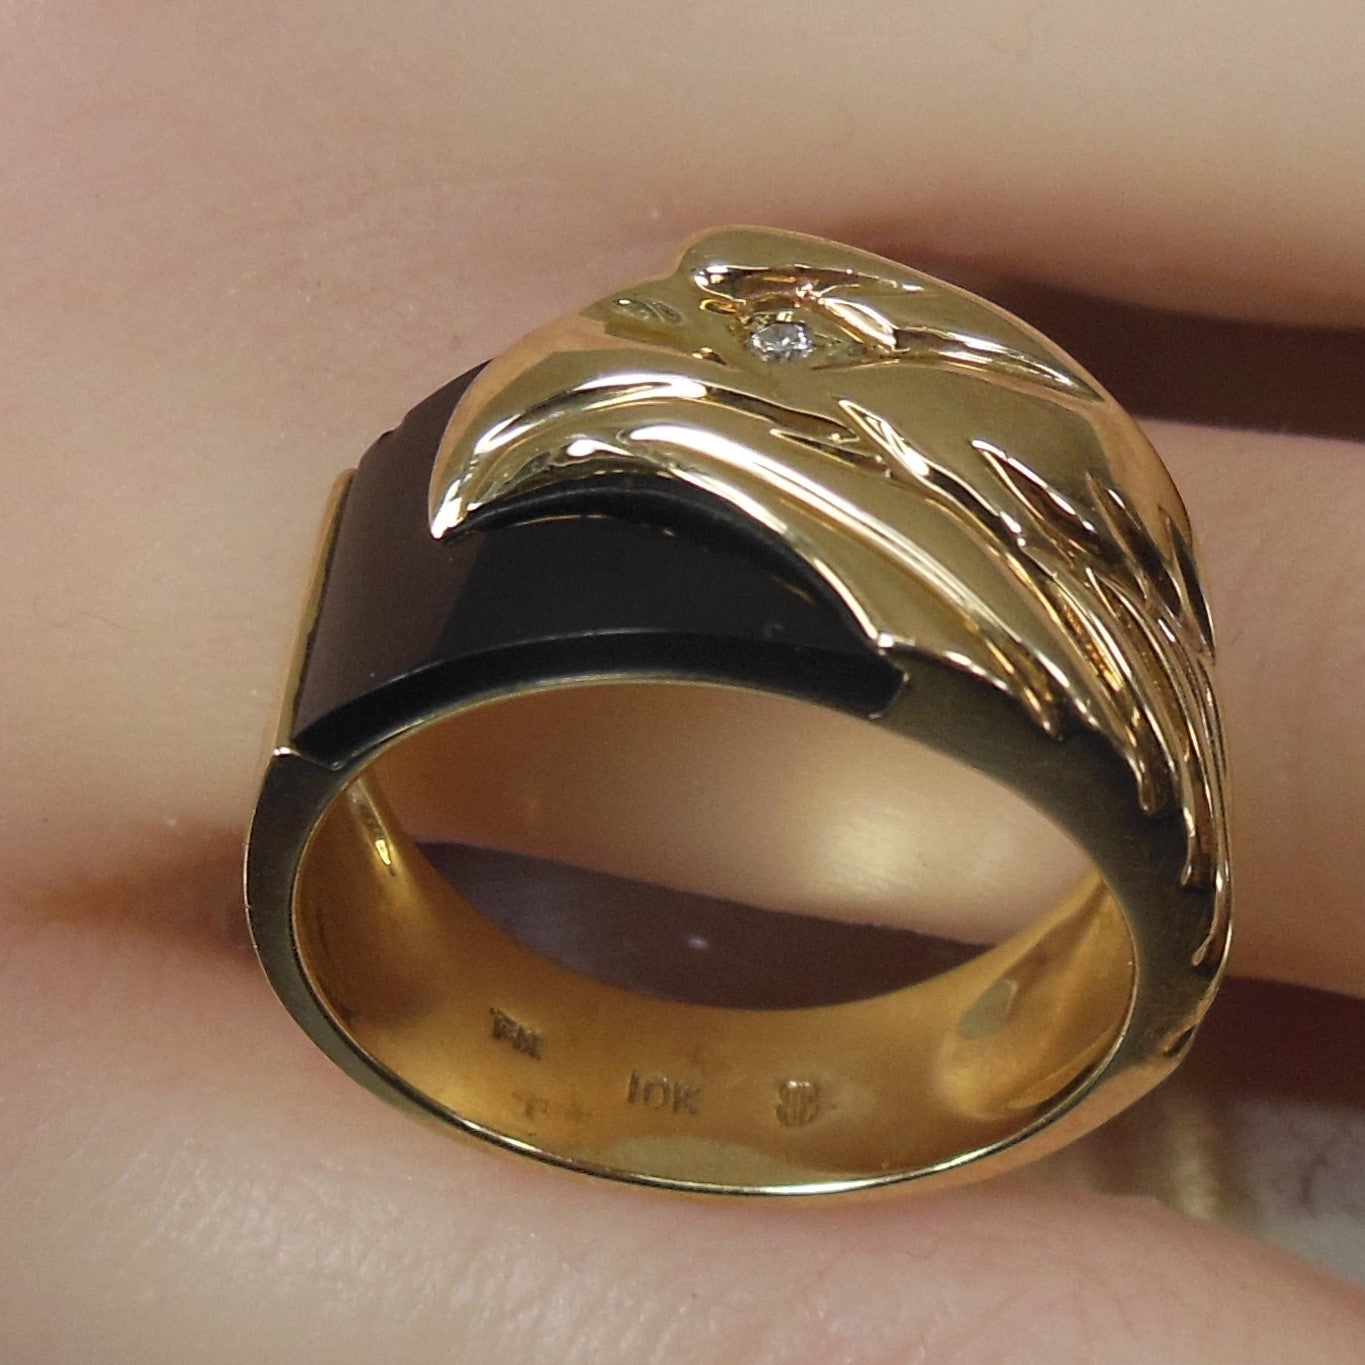 Franklin Mint Men's Ring 10K Yellow Gold Black Onyx Diamond Eagle Size 8.25 used